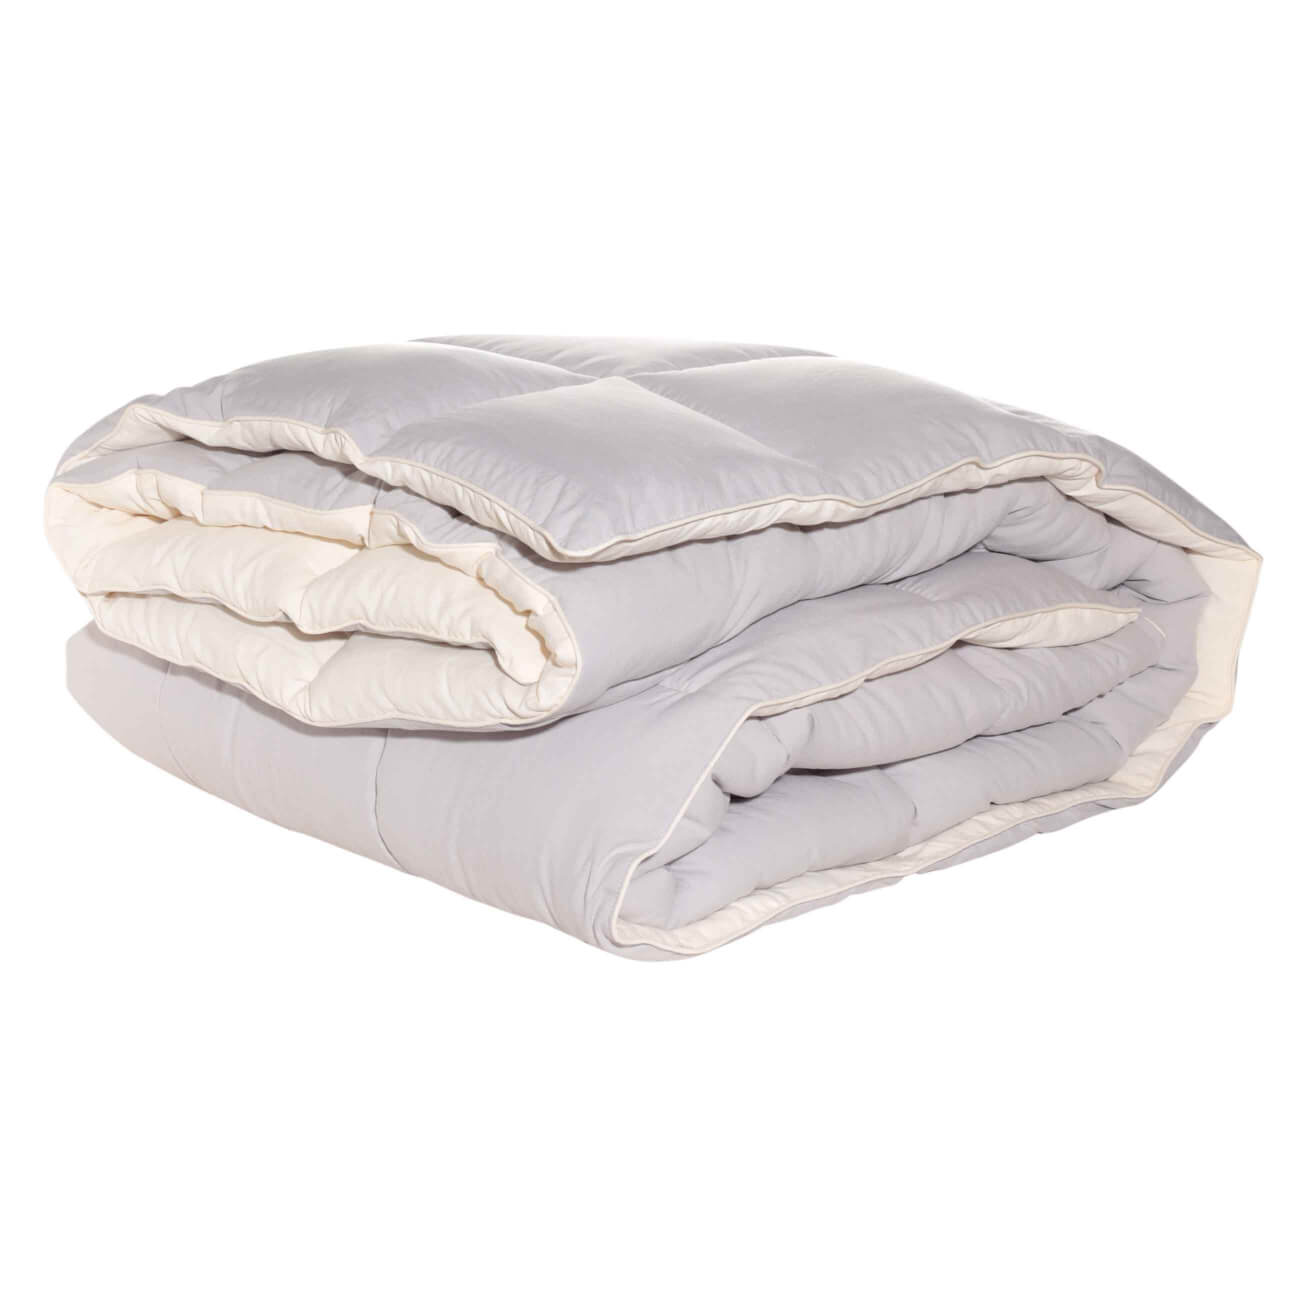 Одеяло, 200х220 см, микрофибра/холлофайбер, бежевое/молочное, Hollow fiber пуховое одеяло louis pascal николь бежевое 200х220 см лп2022